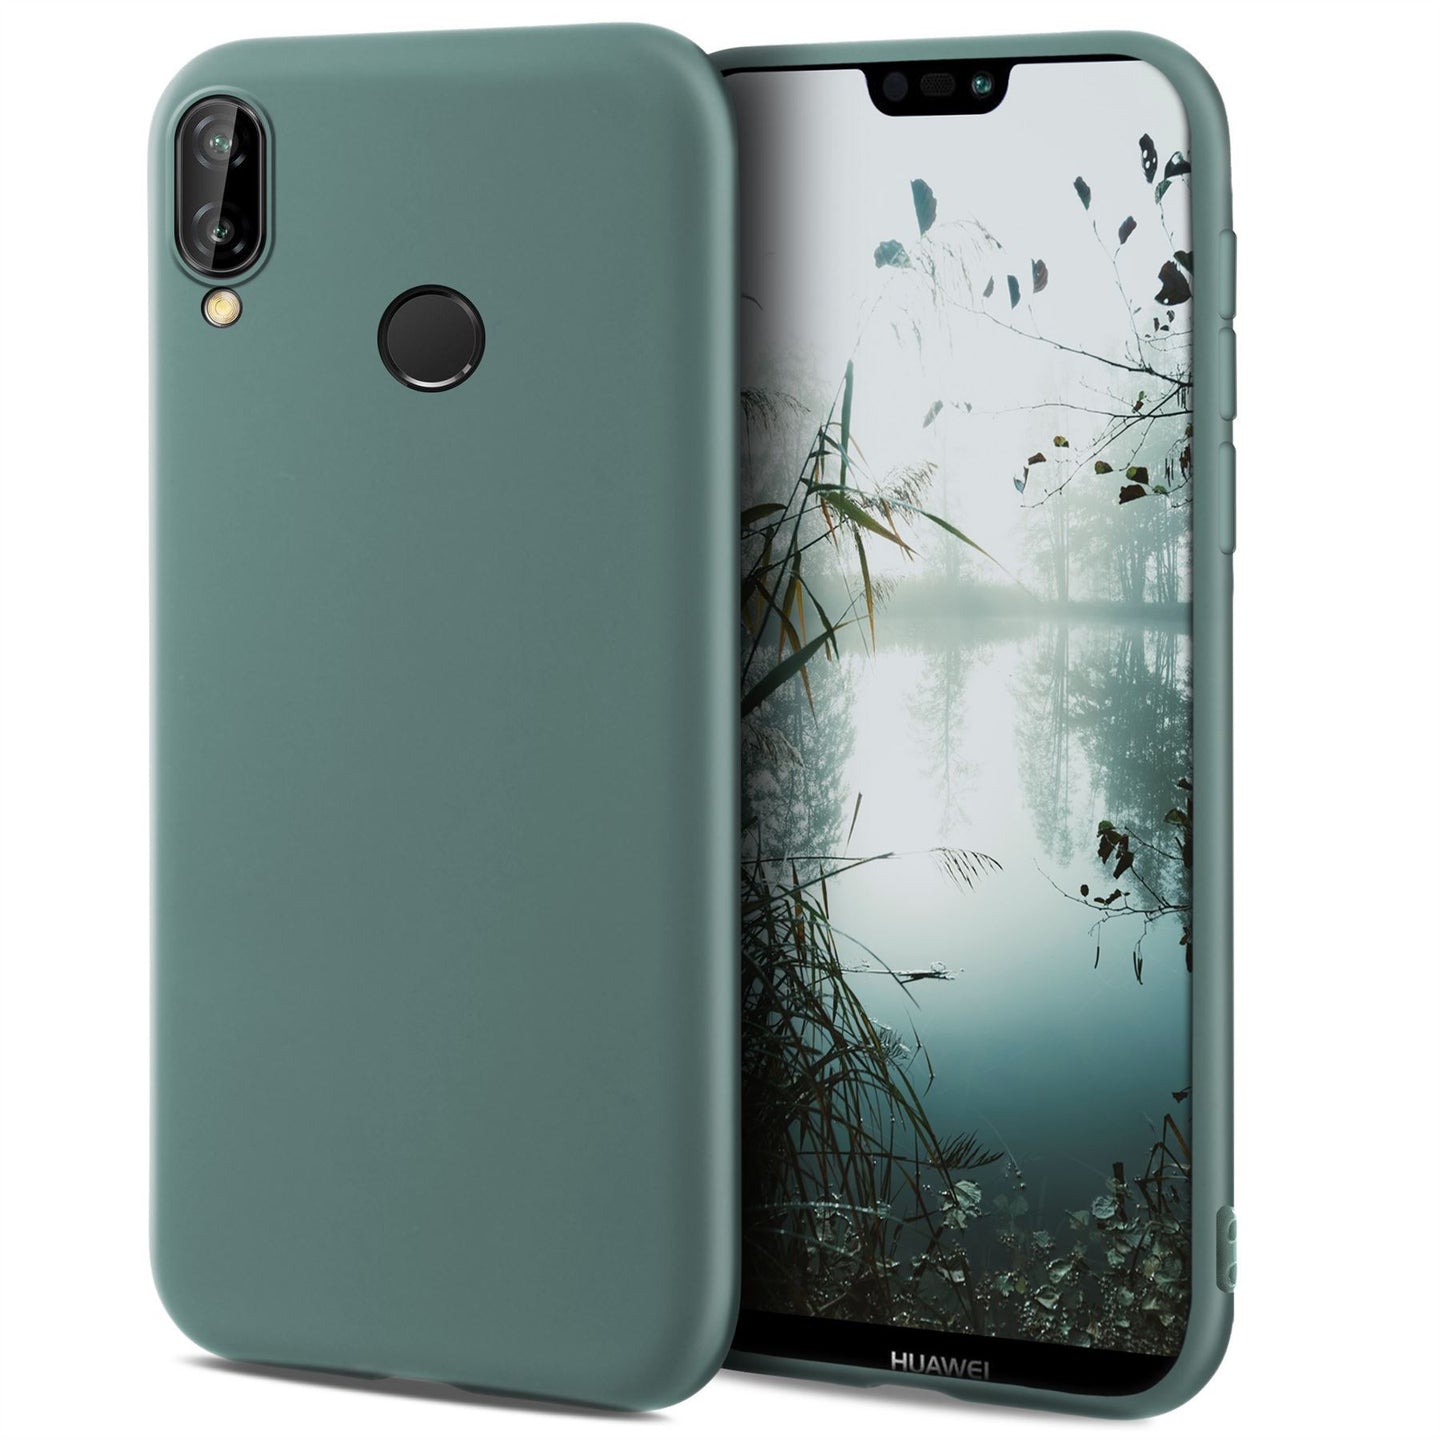 Moozy Minimalist Series Silicone Case for Huawei P20 Lite, Blue Grey - Matte Finish Slim Soft TPU Cover